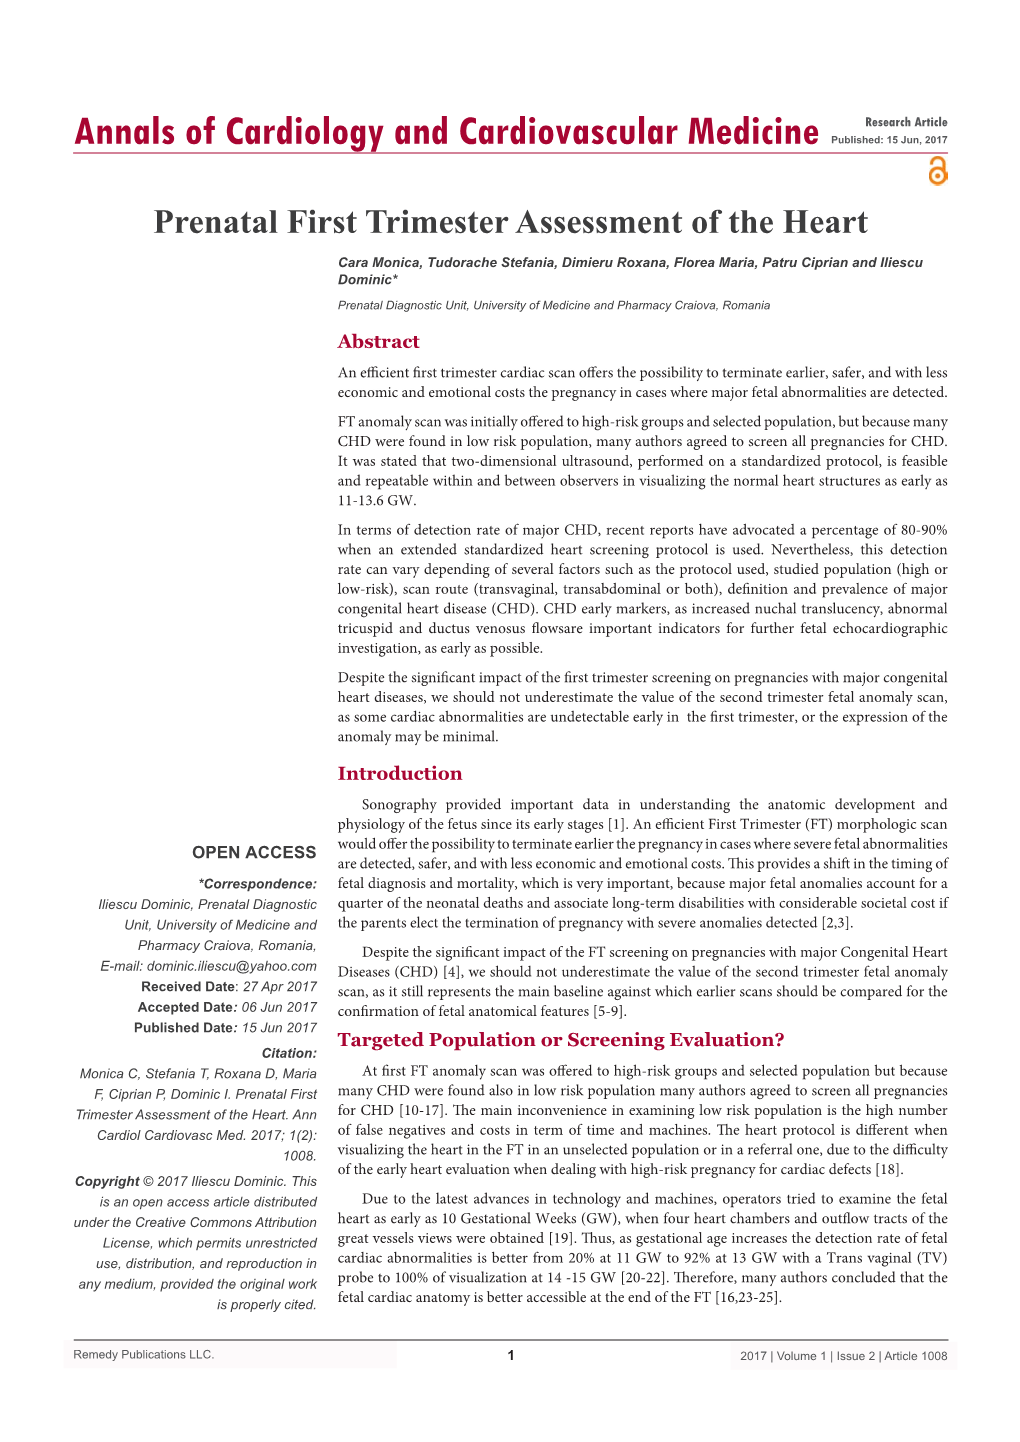 Prenatal First Trimester Assessment of the Heart